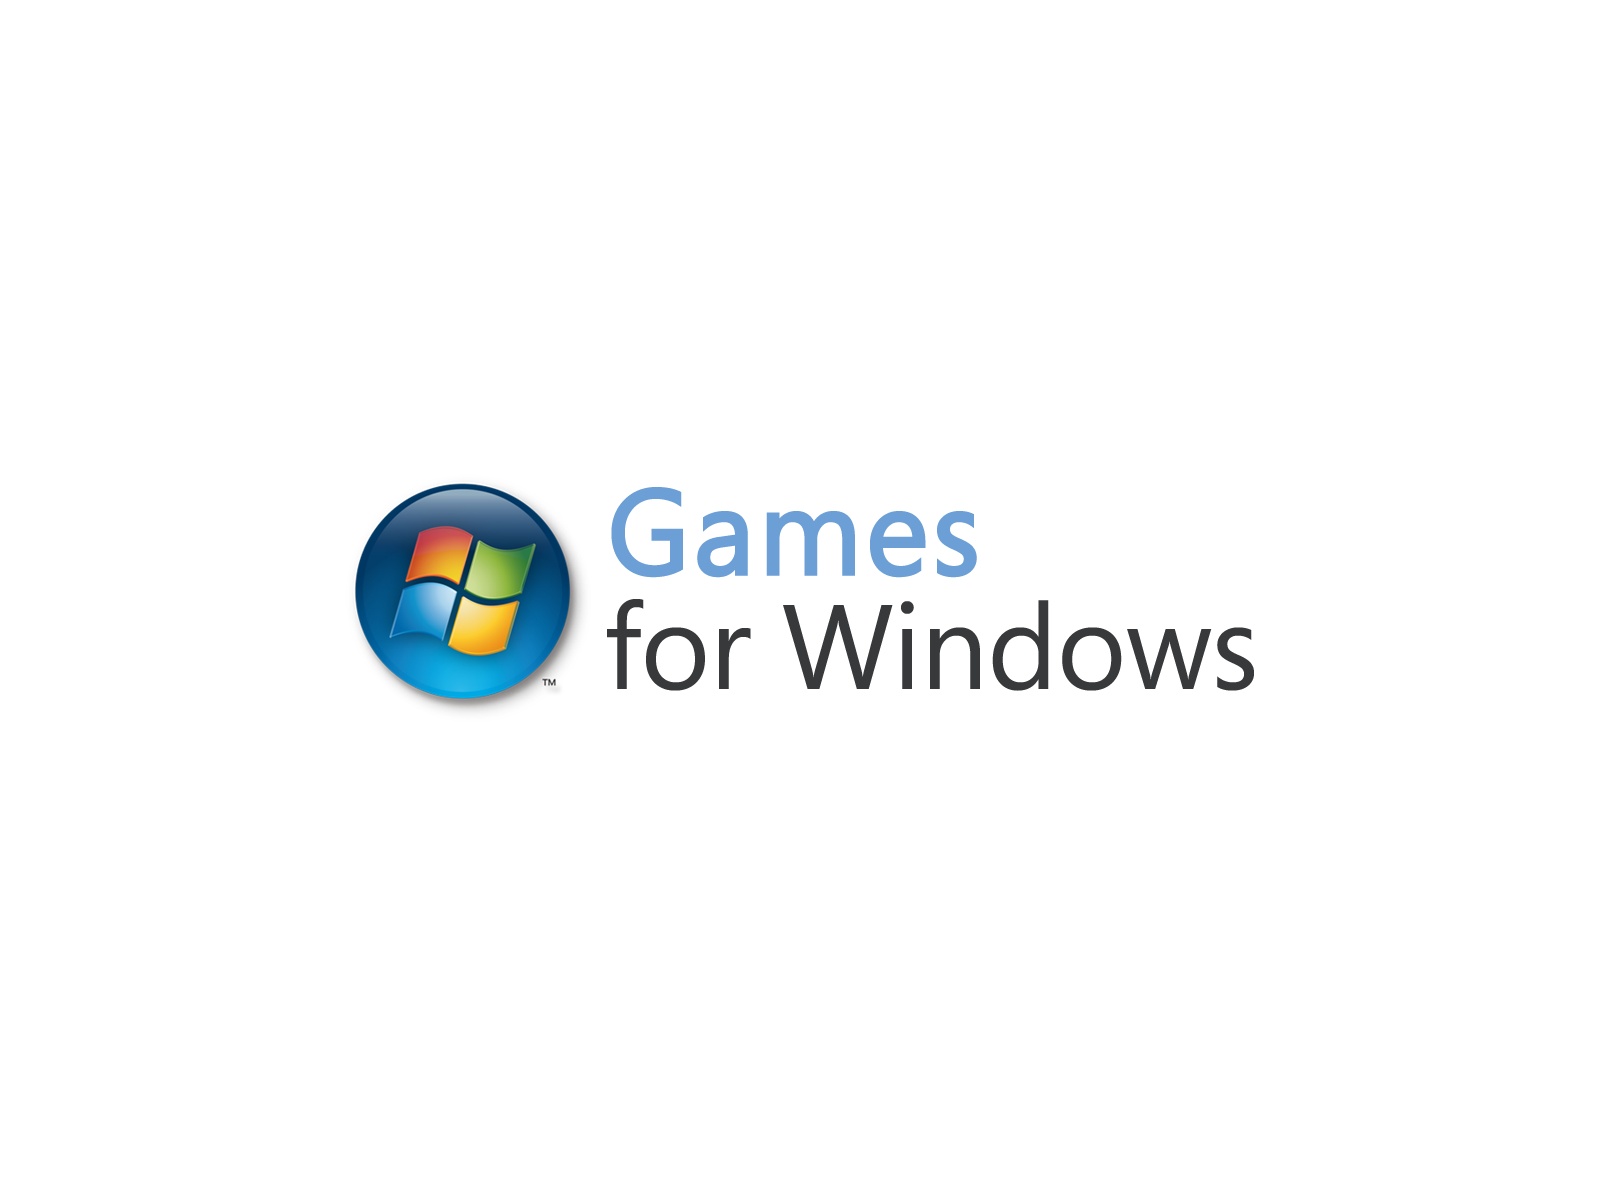 Windows fora. Games for Windows. Microsoft games for Windows. Логотип games for Windows. Microsoft games for Windows Live.